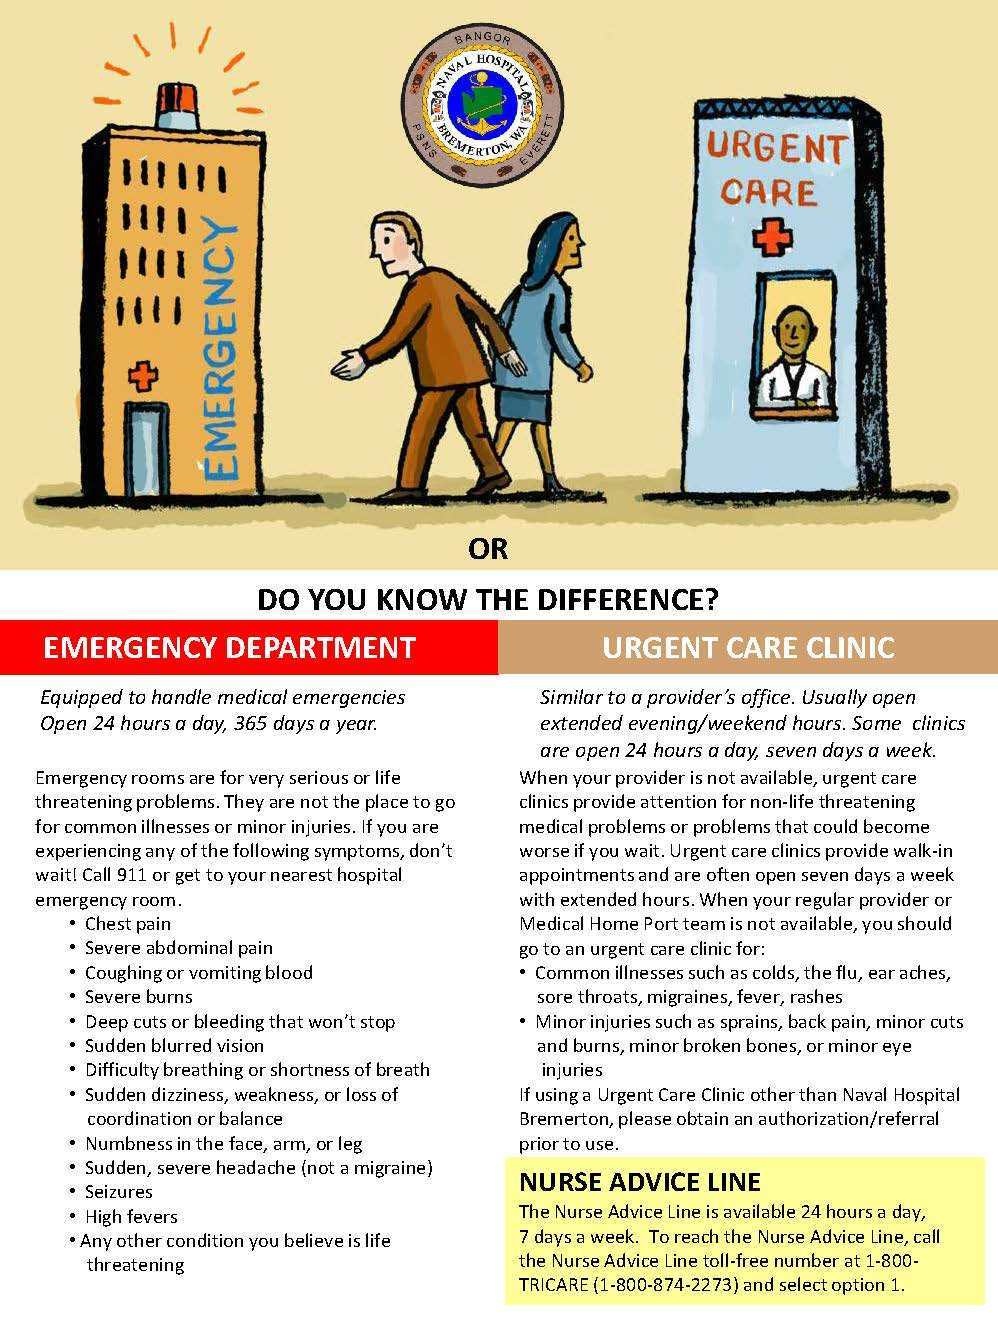 Urgent or Emergency? Naval Hospital Bremerton Urgent Care Clinic Explained